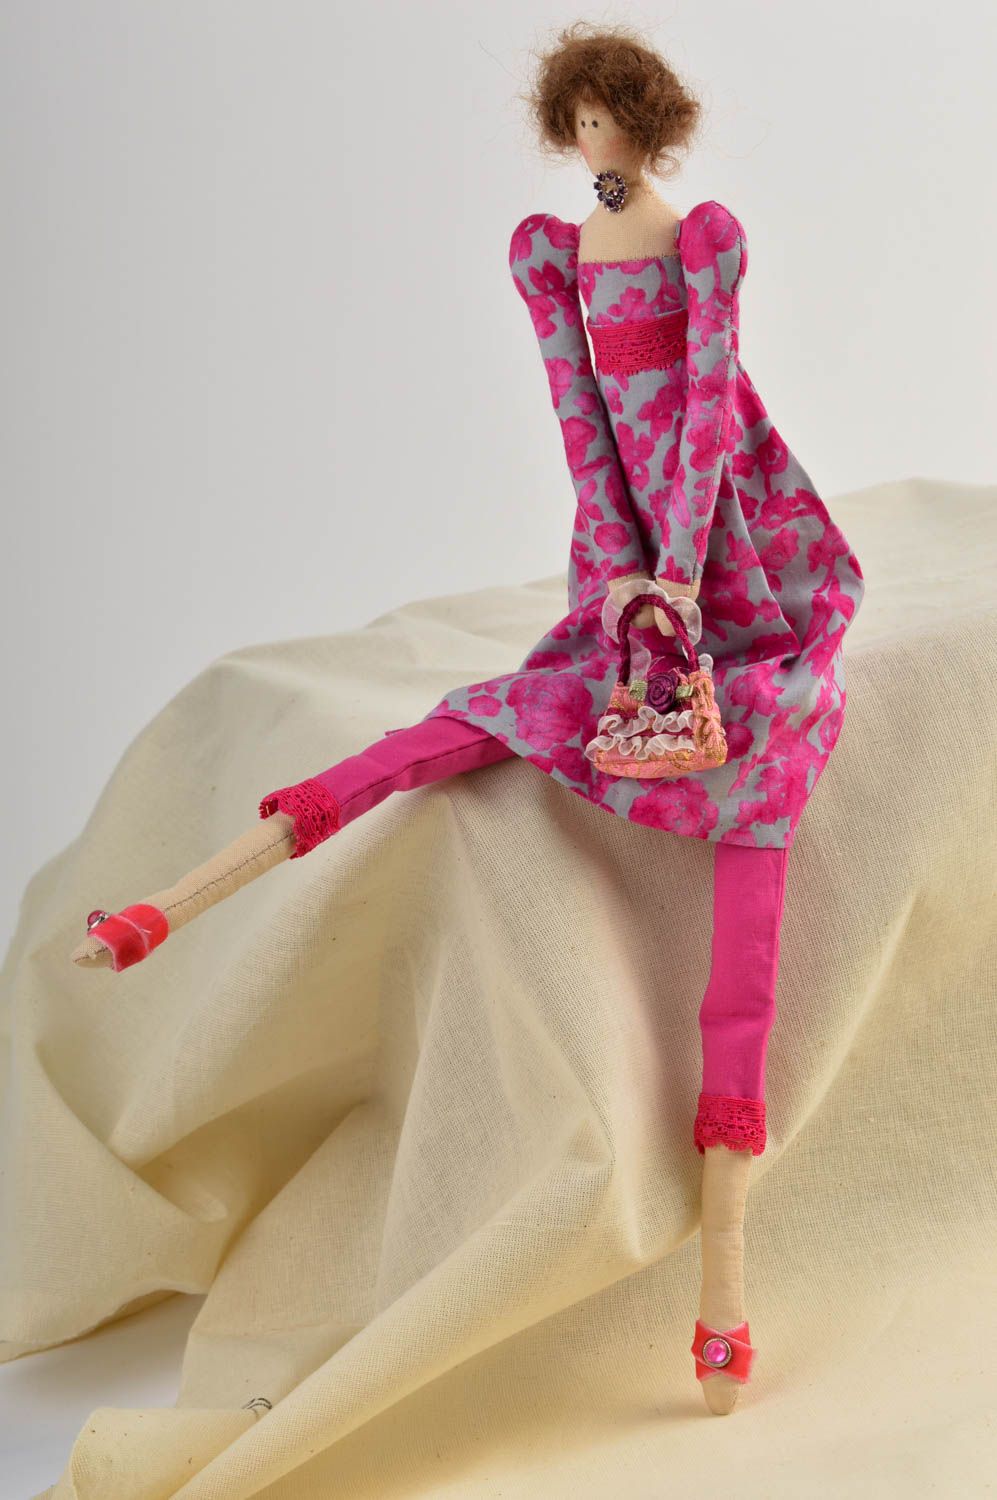 Muñeca de peluche hecha a mano juguete de tela regalo original para niña foto 1